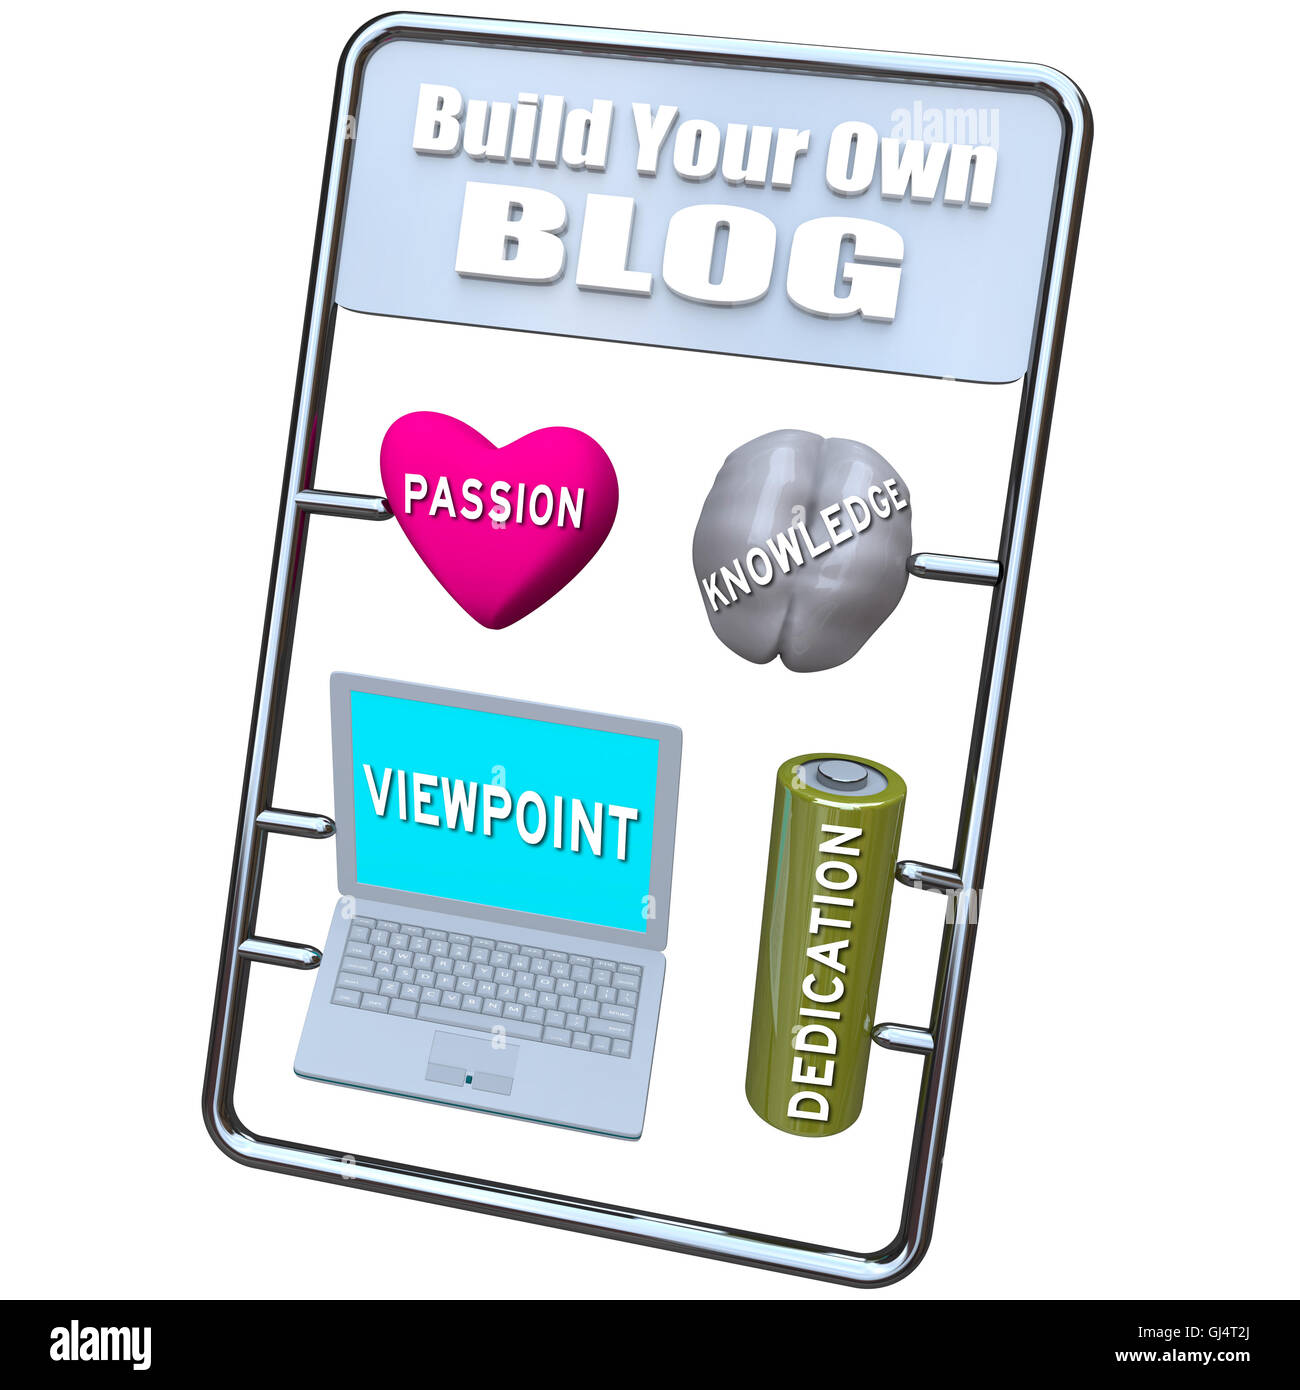 Build Your Own Blog - Model Kit Stock Photo